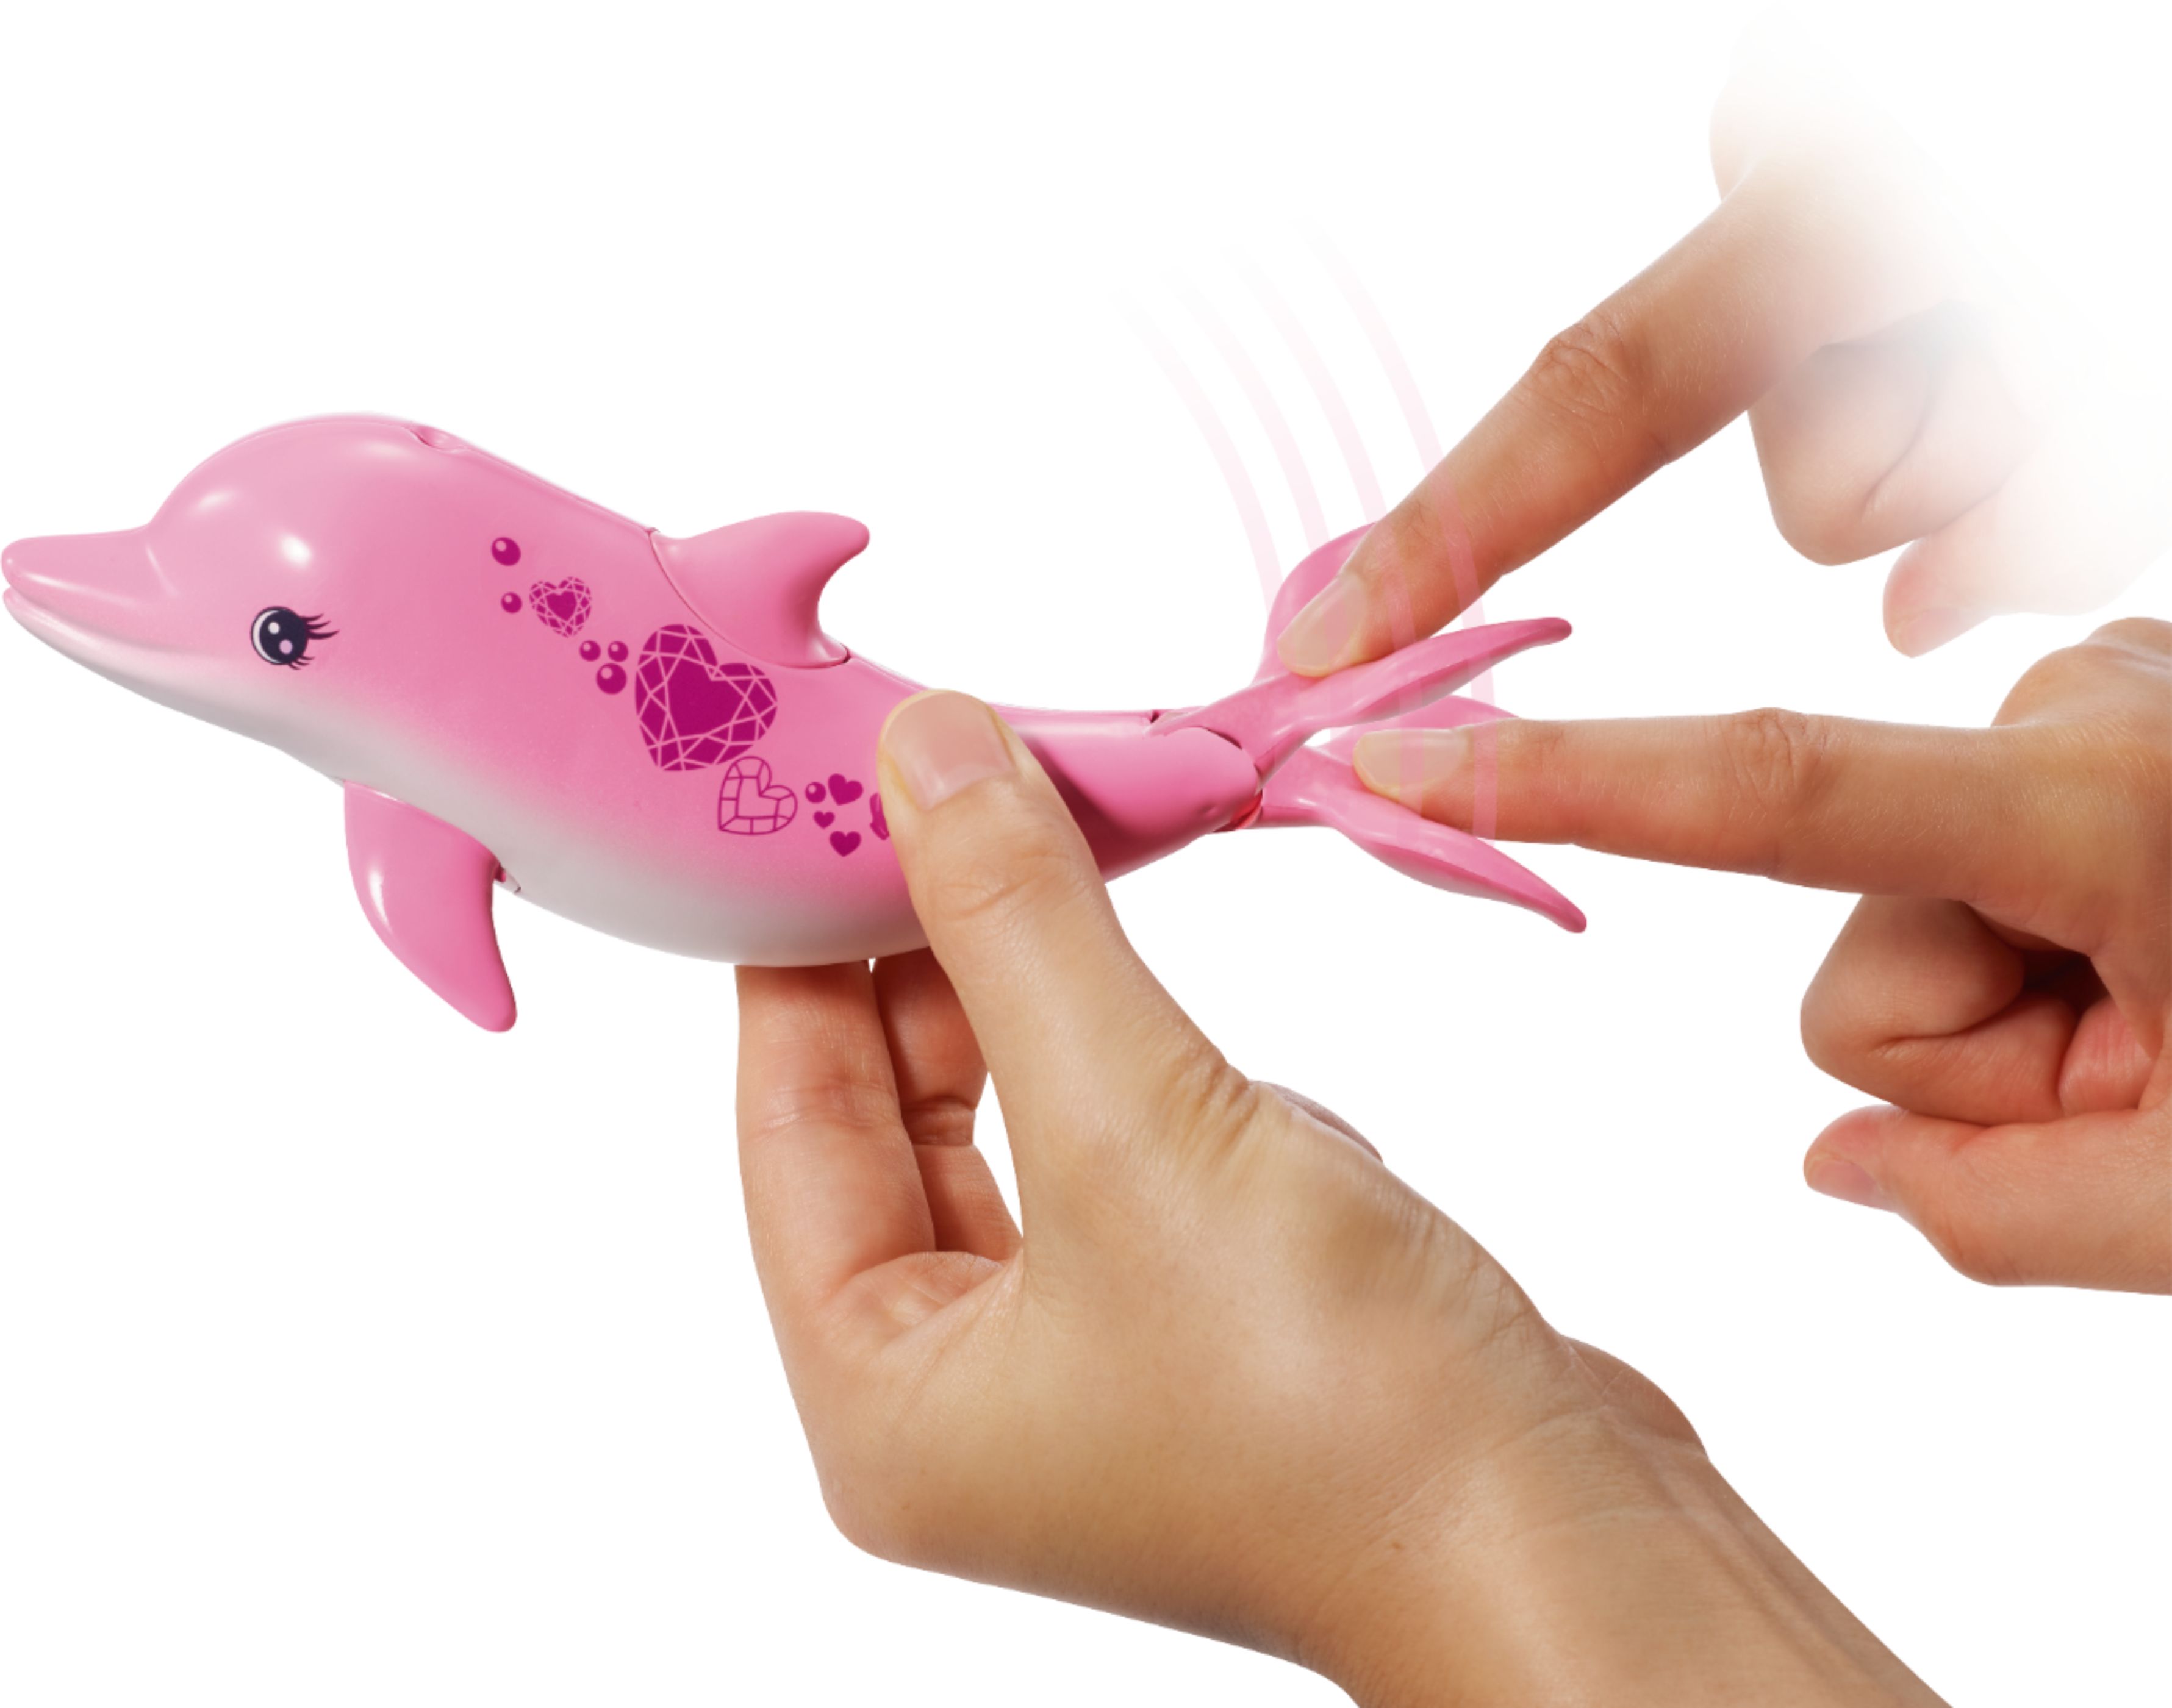 barbie dolphin magic snorkel